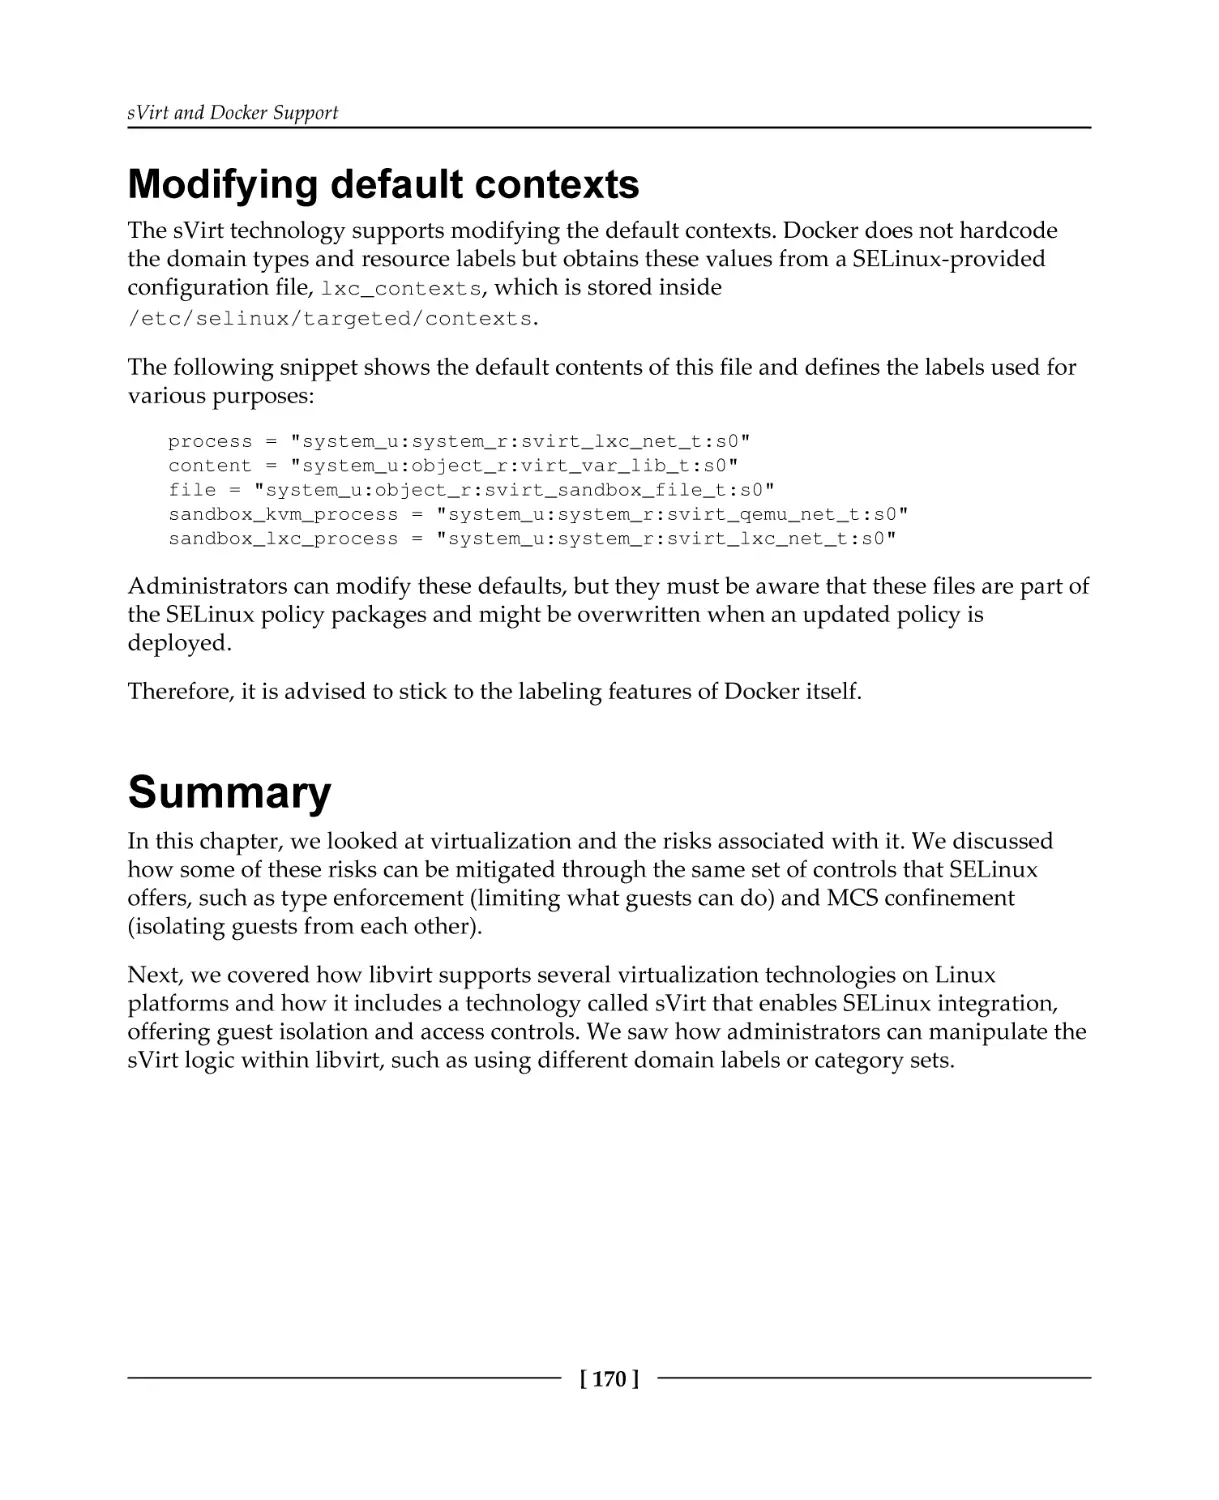 Modifying default contexts
Summary